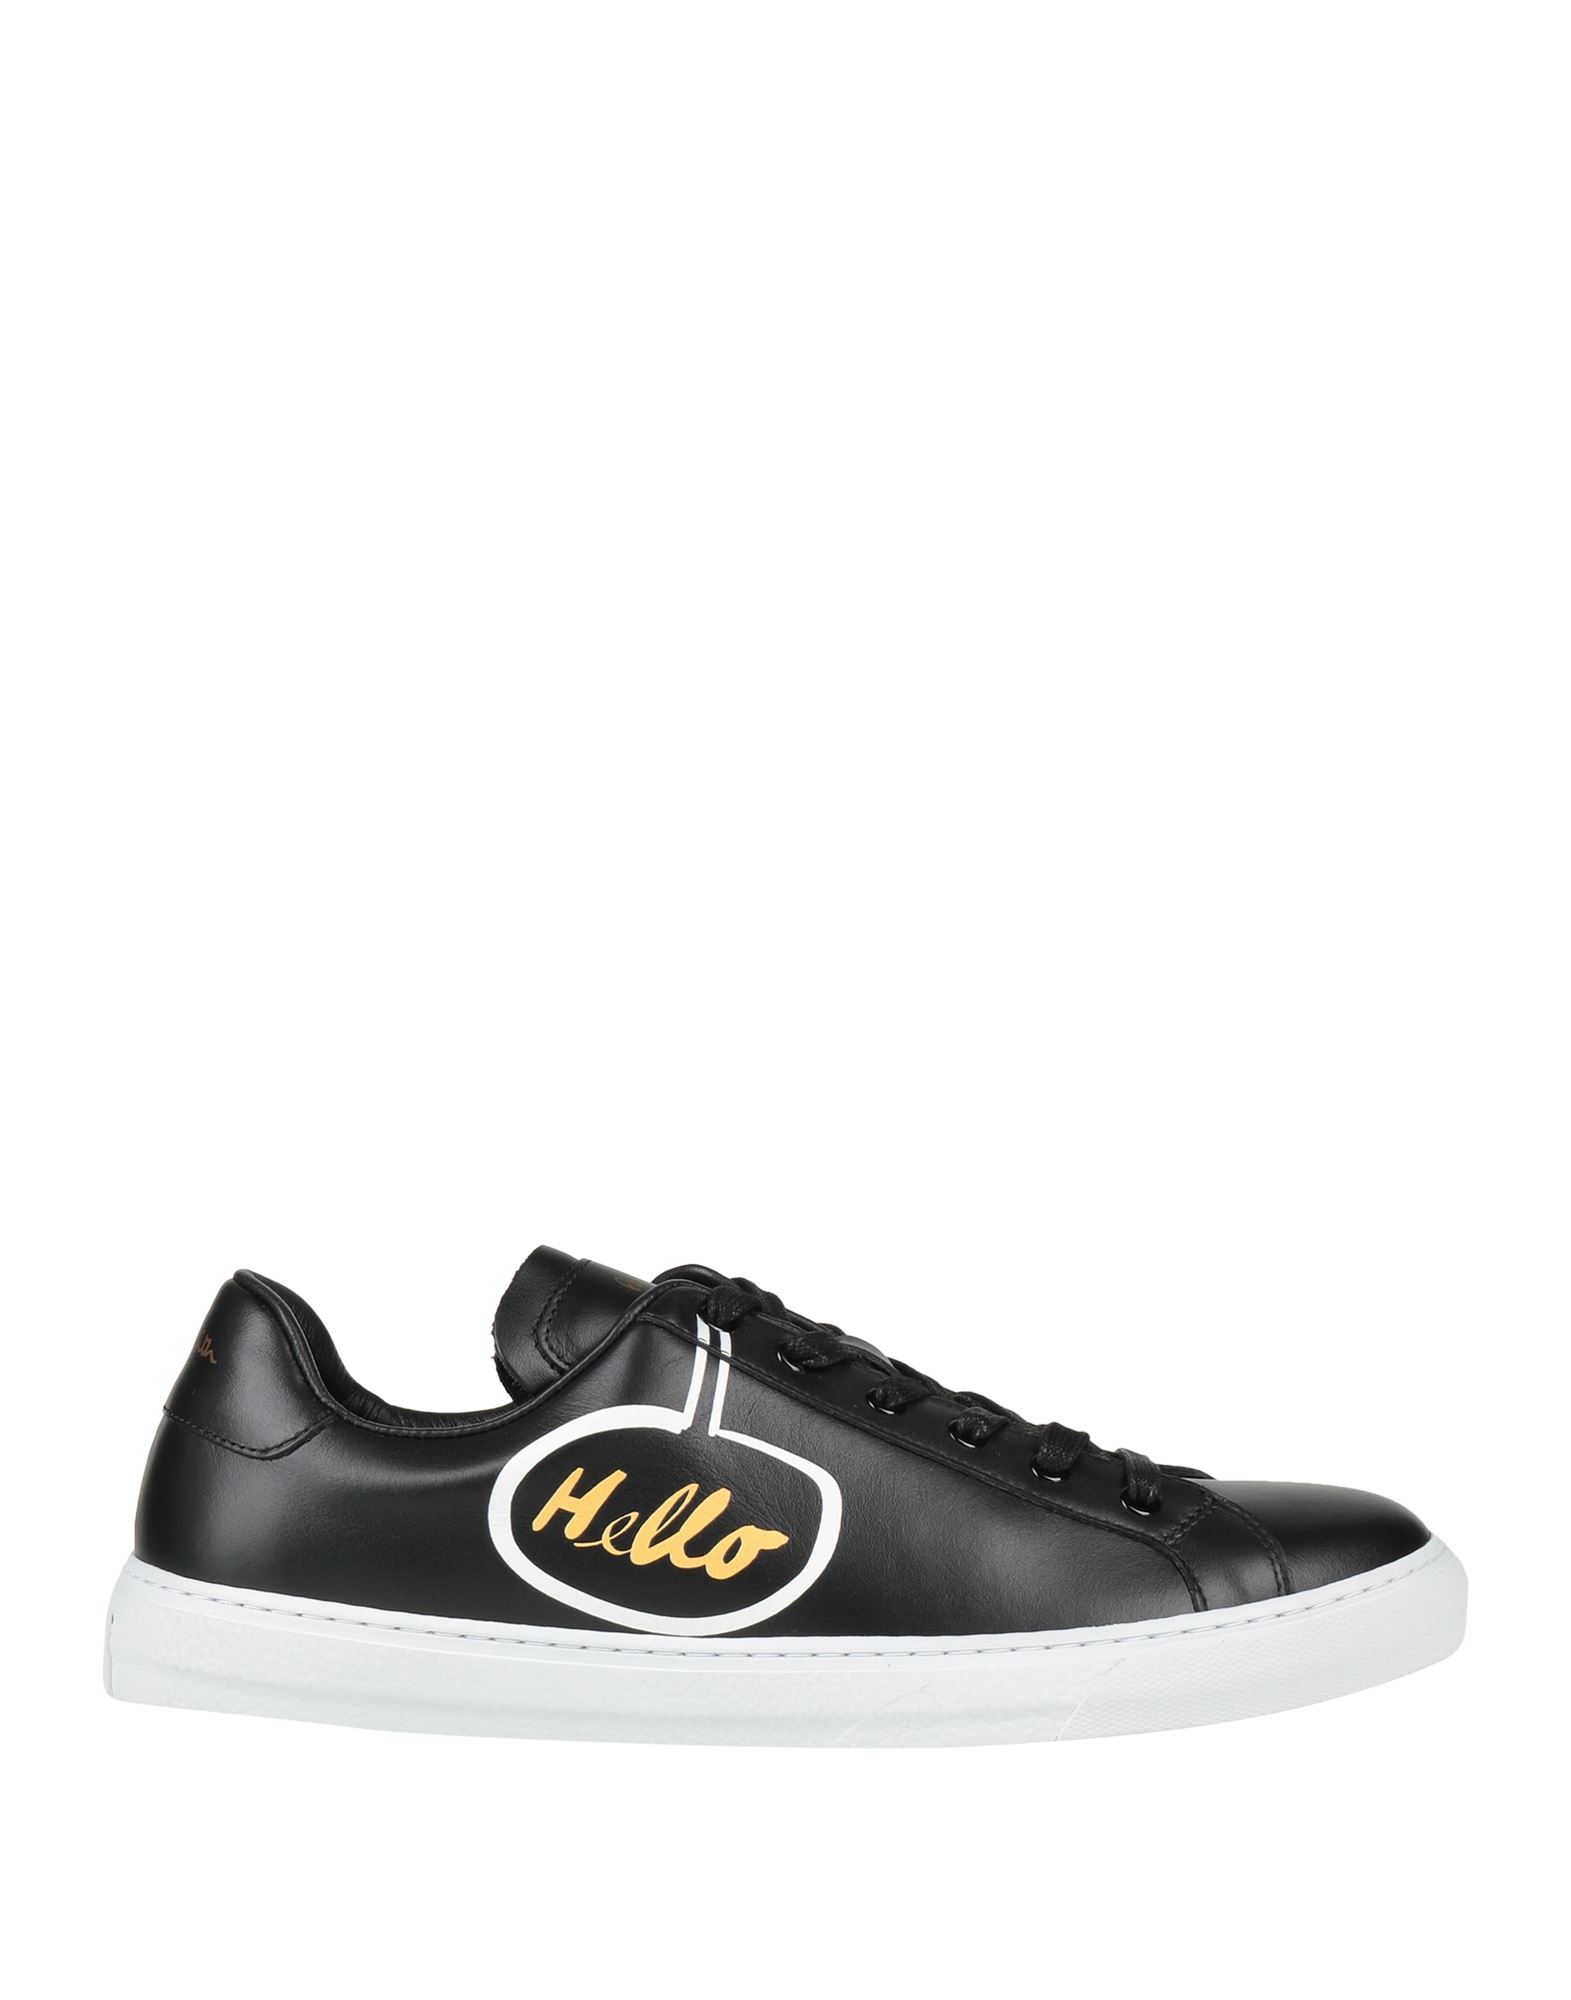 Paul Smith Sneakers In Black